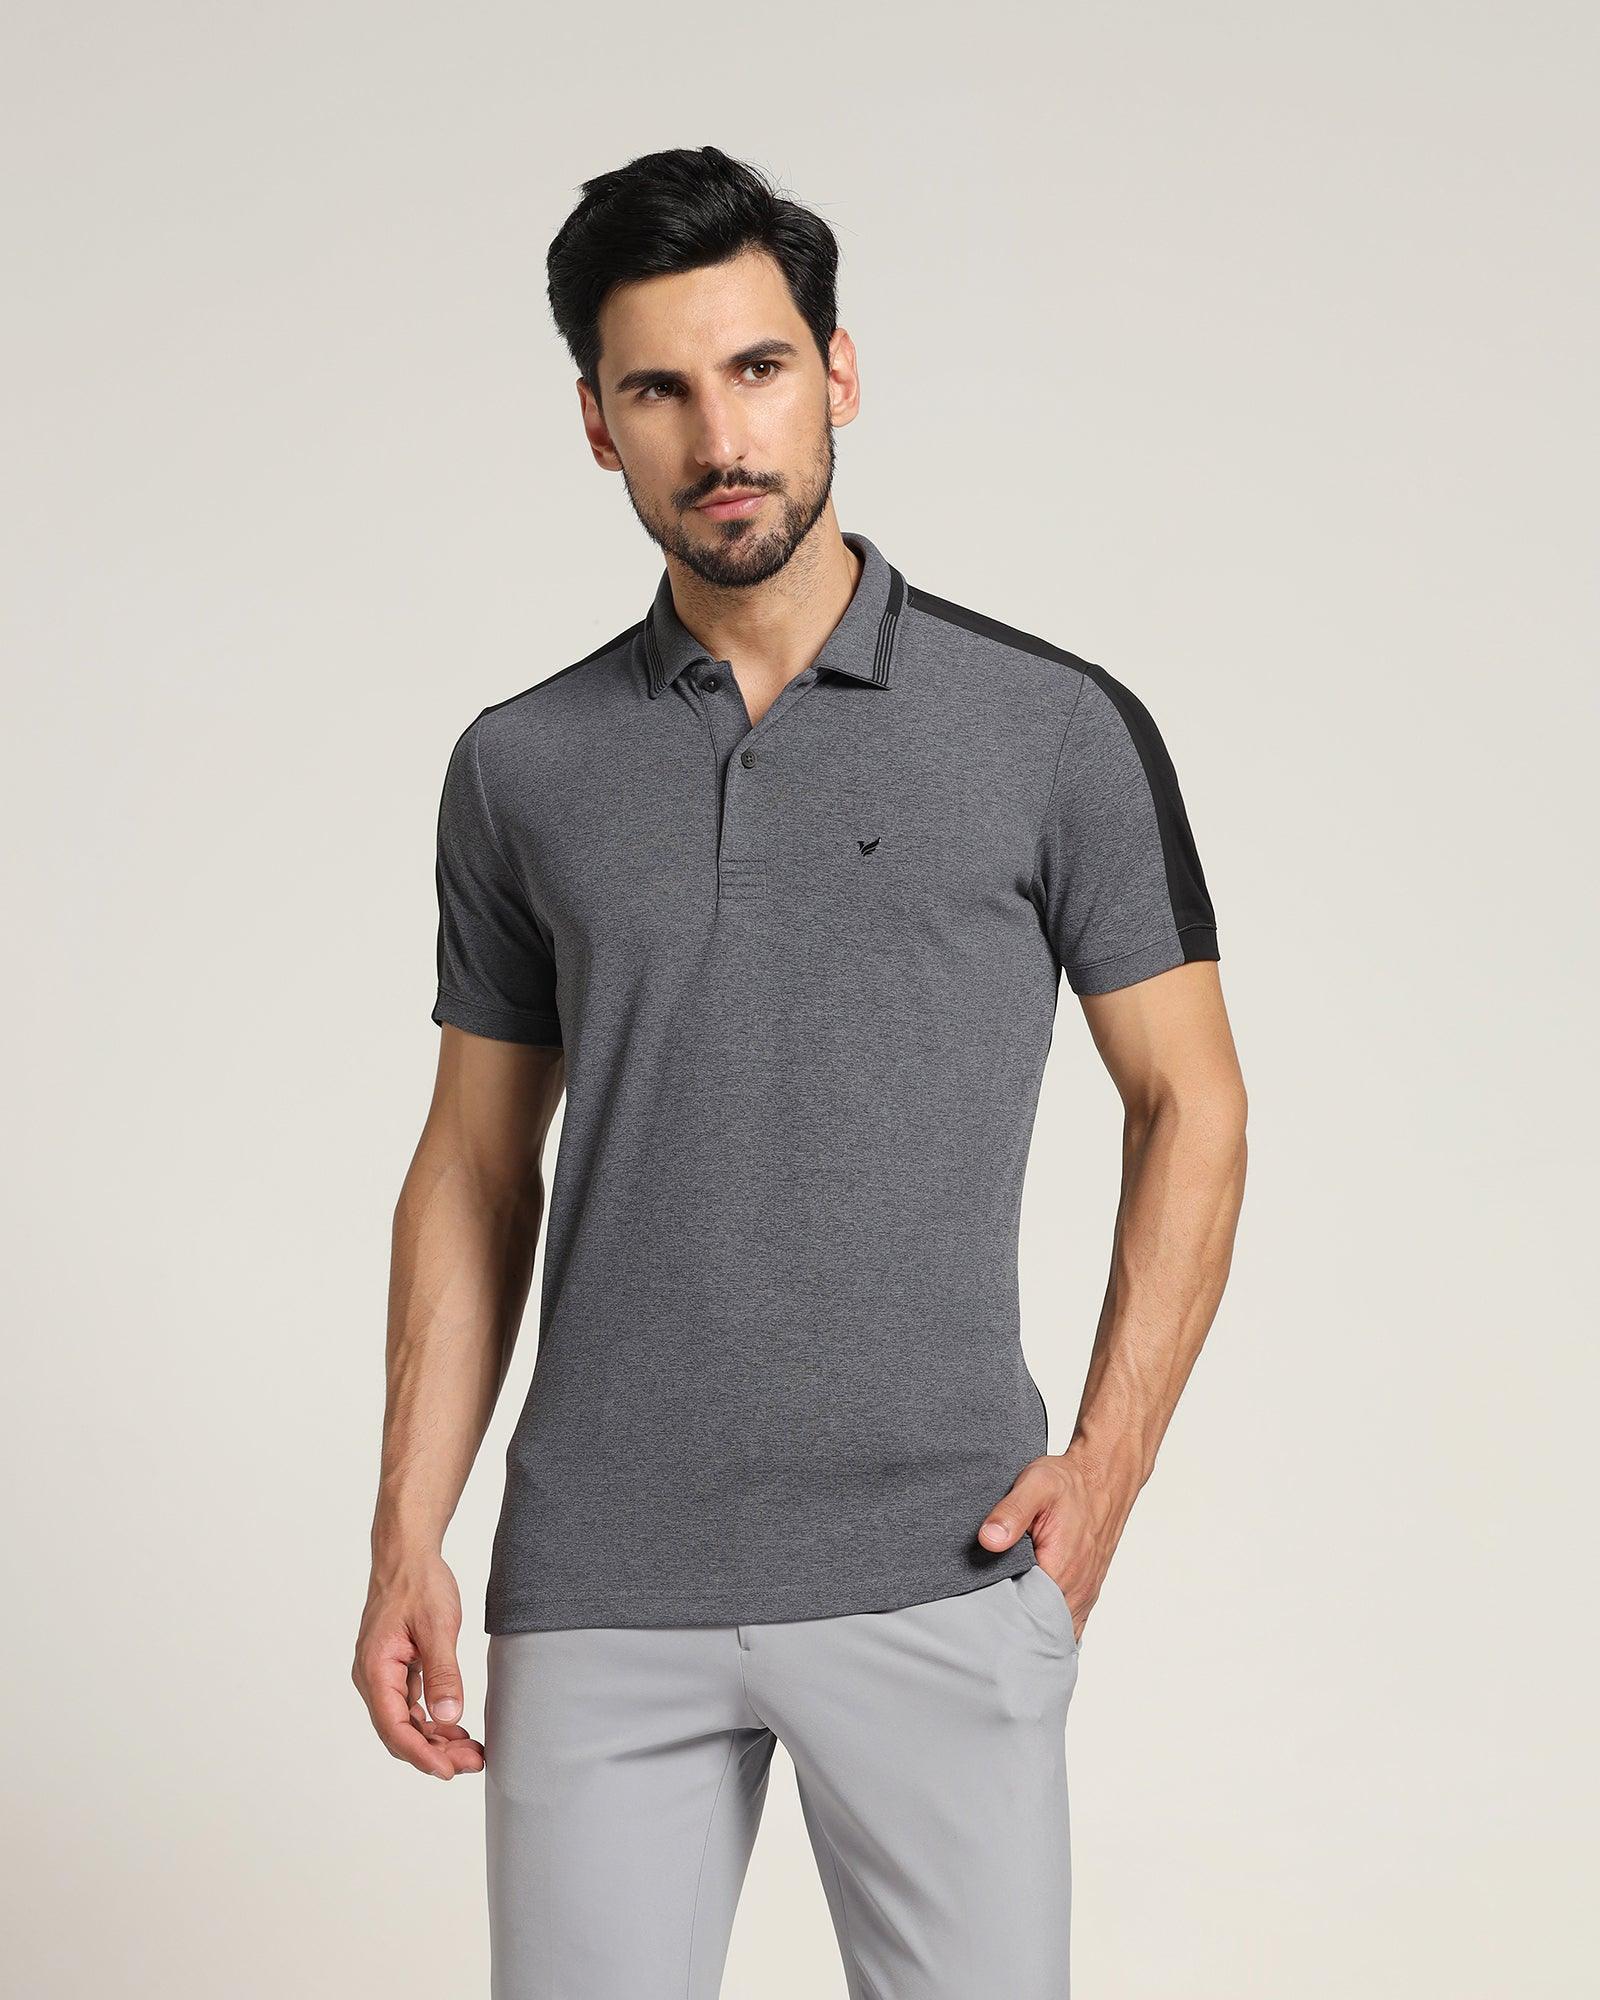 techpro textured polo t shirt in grey (itachi)